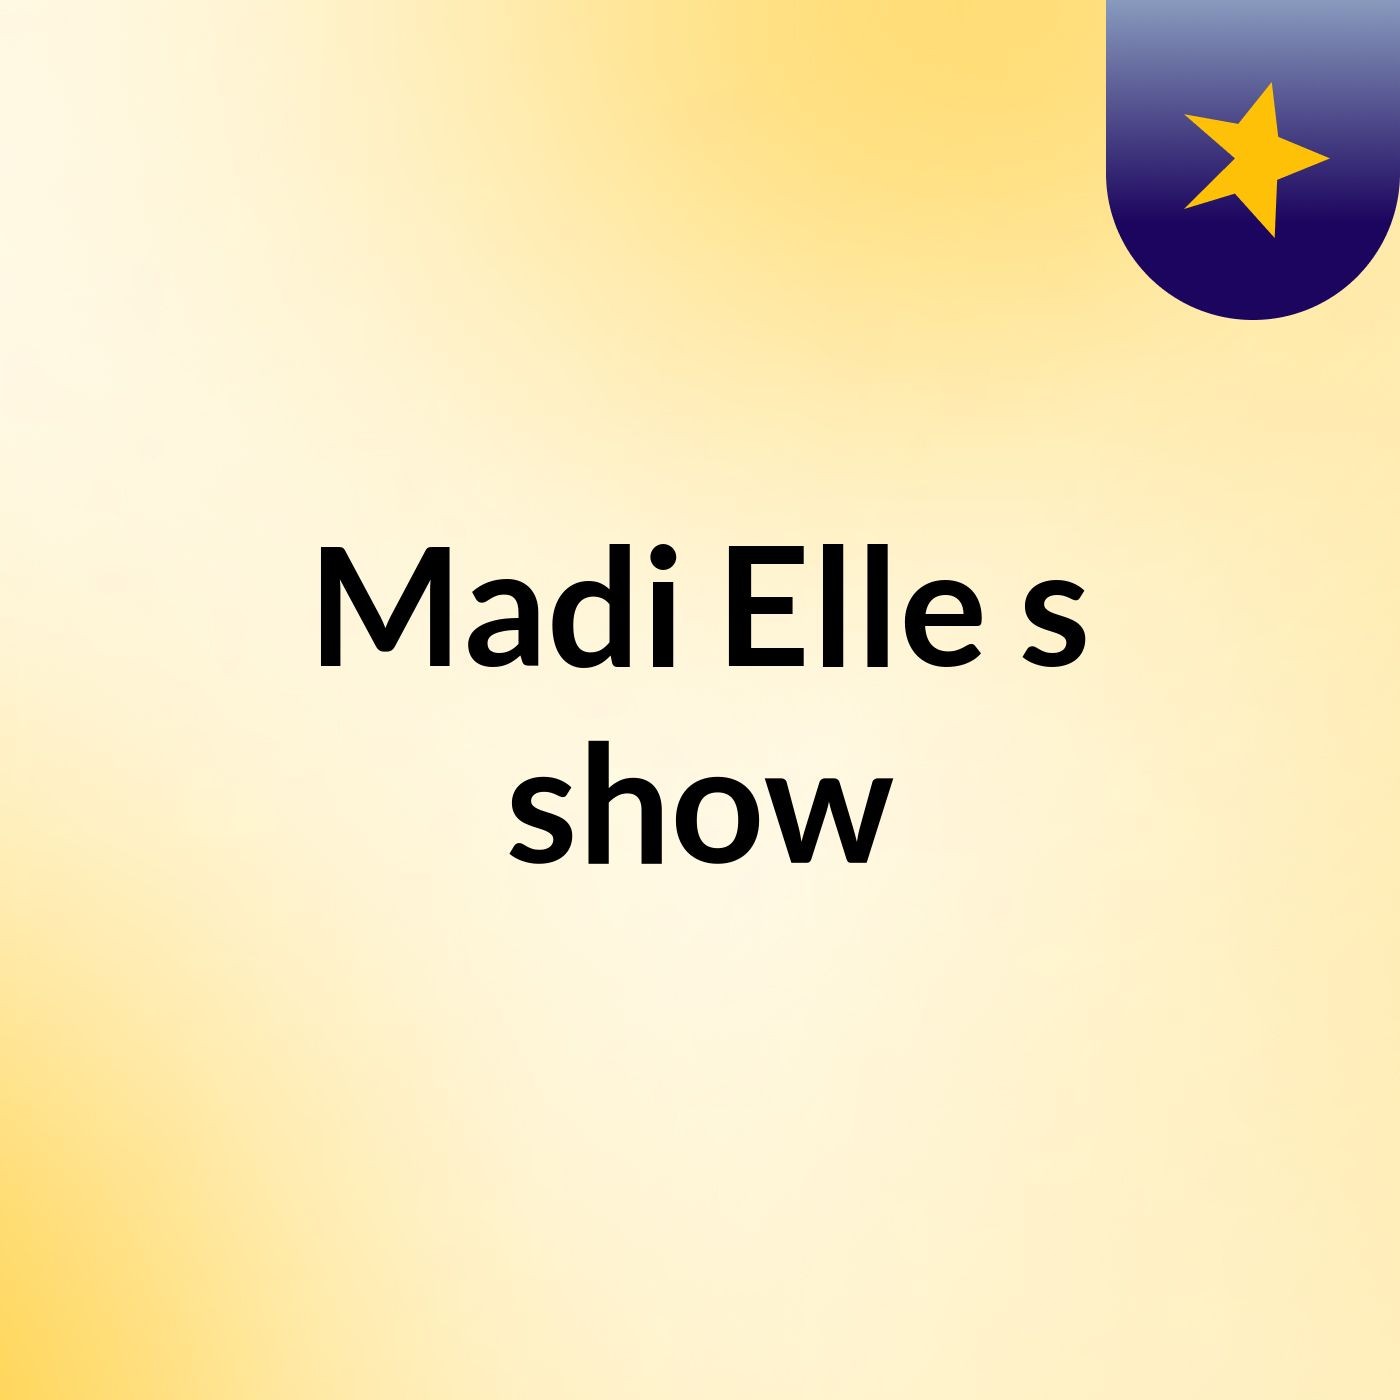 Madi Elle's show